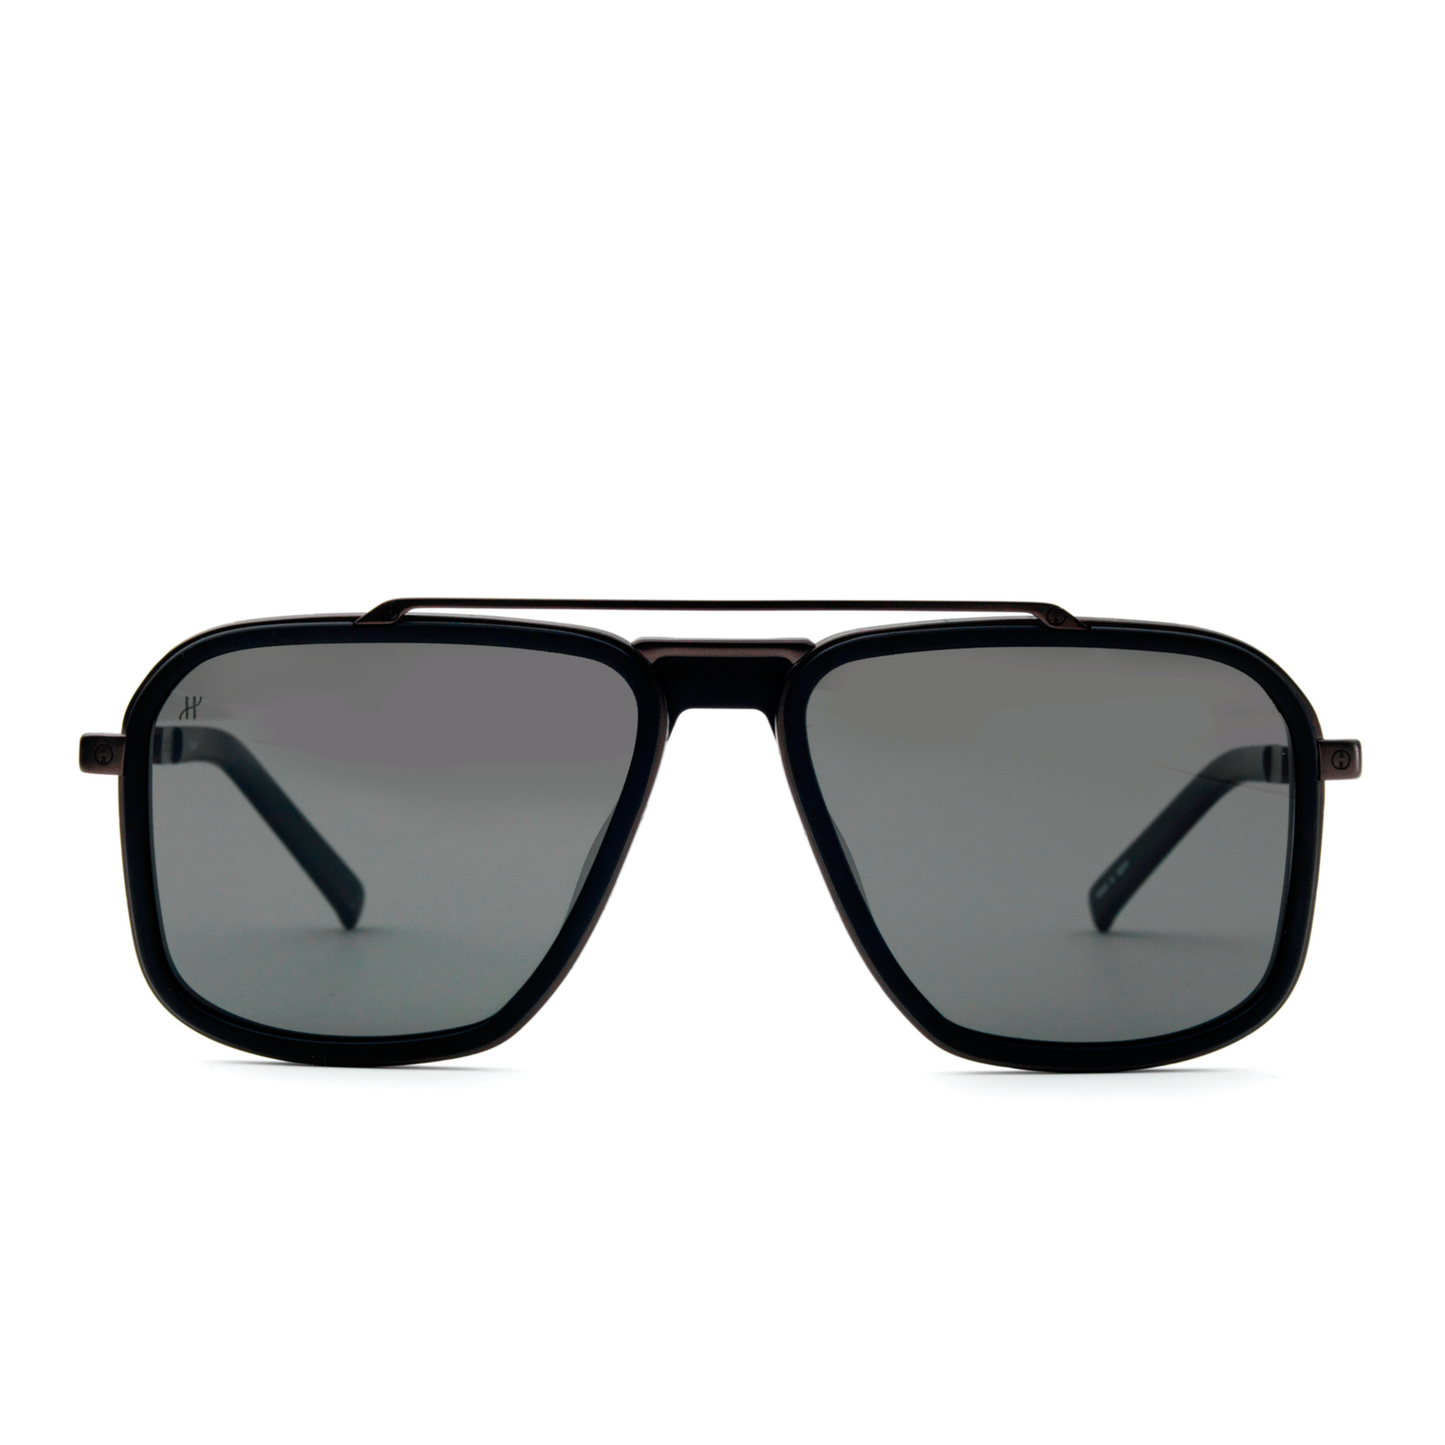 Black Matte Squared Sunglasses with Gradient Smoke Black Lens